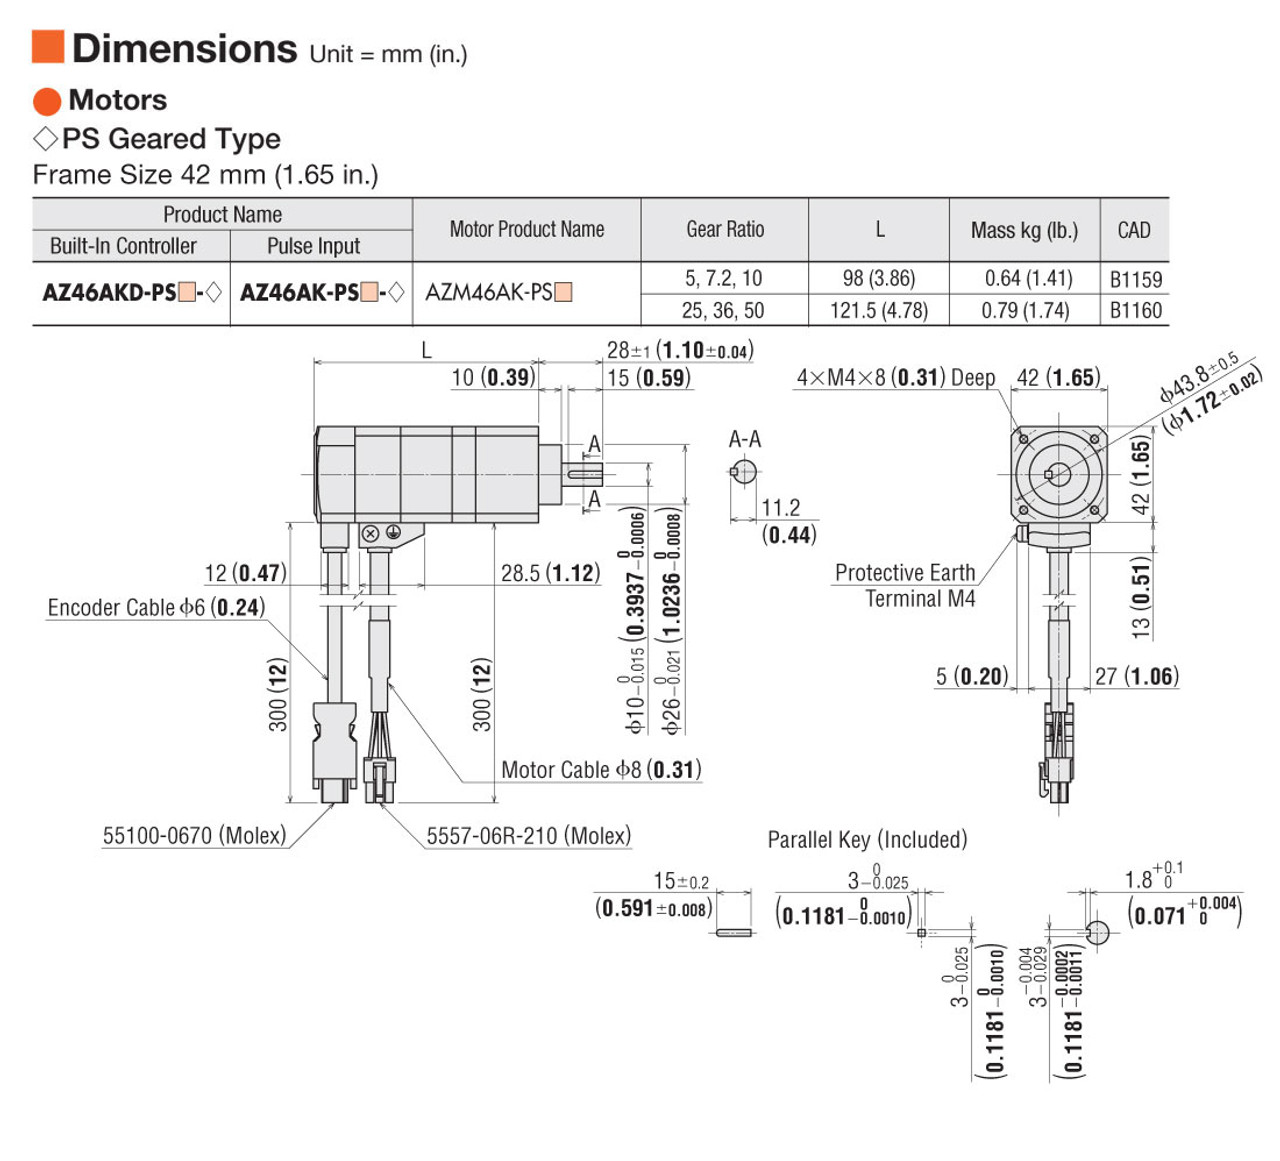 AZ46AKD-PS50-3 - Dimensions